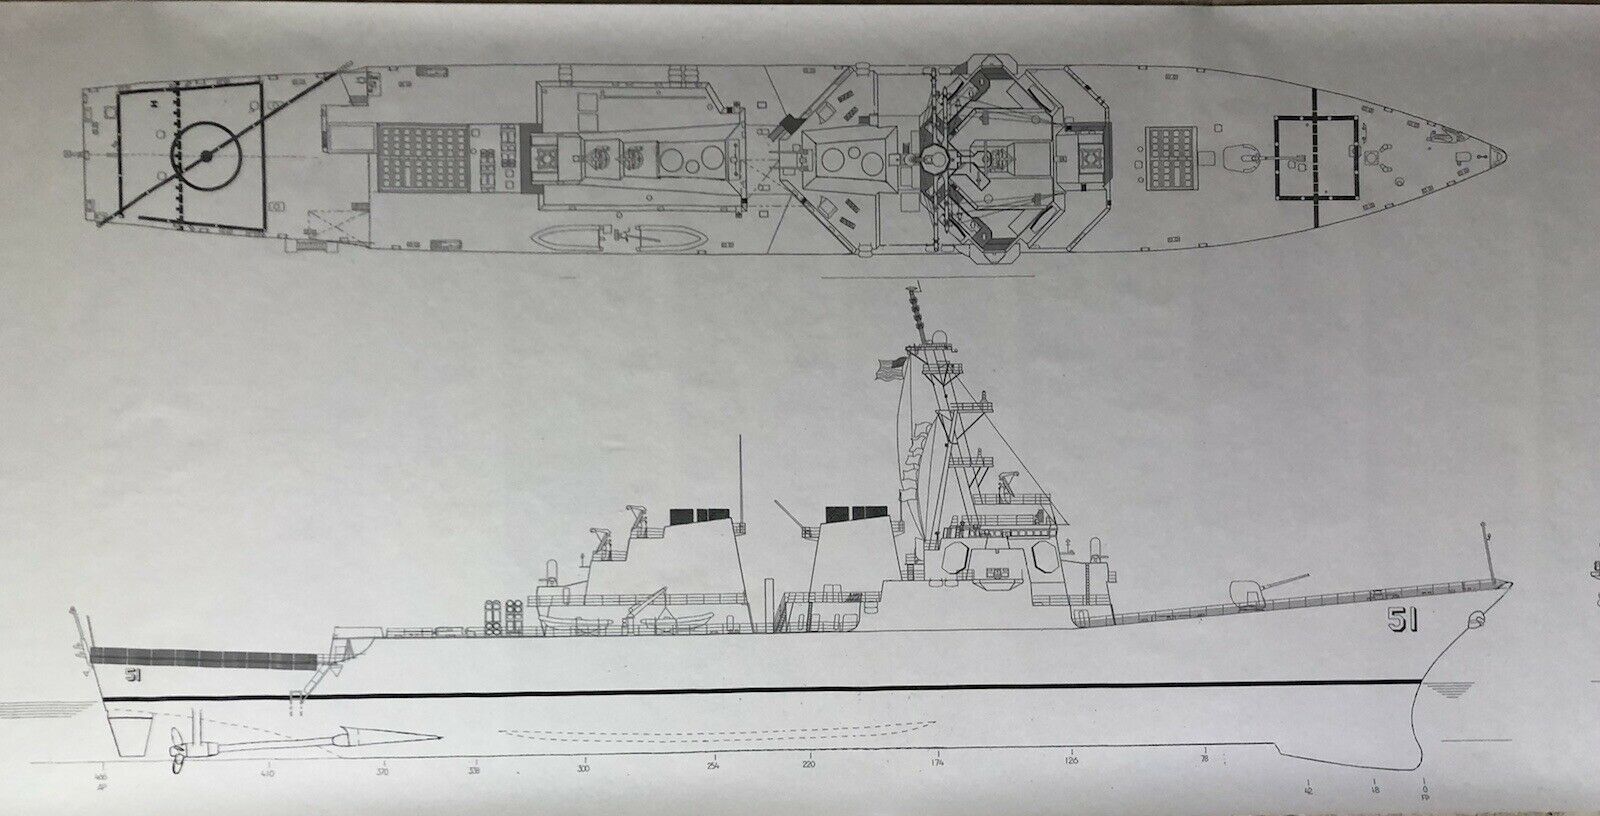 Uss Arleigh Burke Ddg-51 Destroyer  By The Scale Shipyard - Huge!! 10' Feet!!